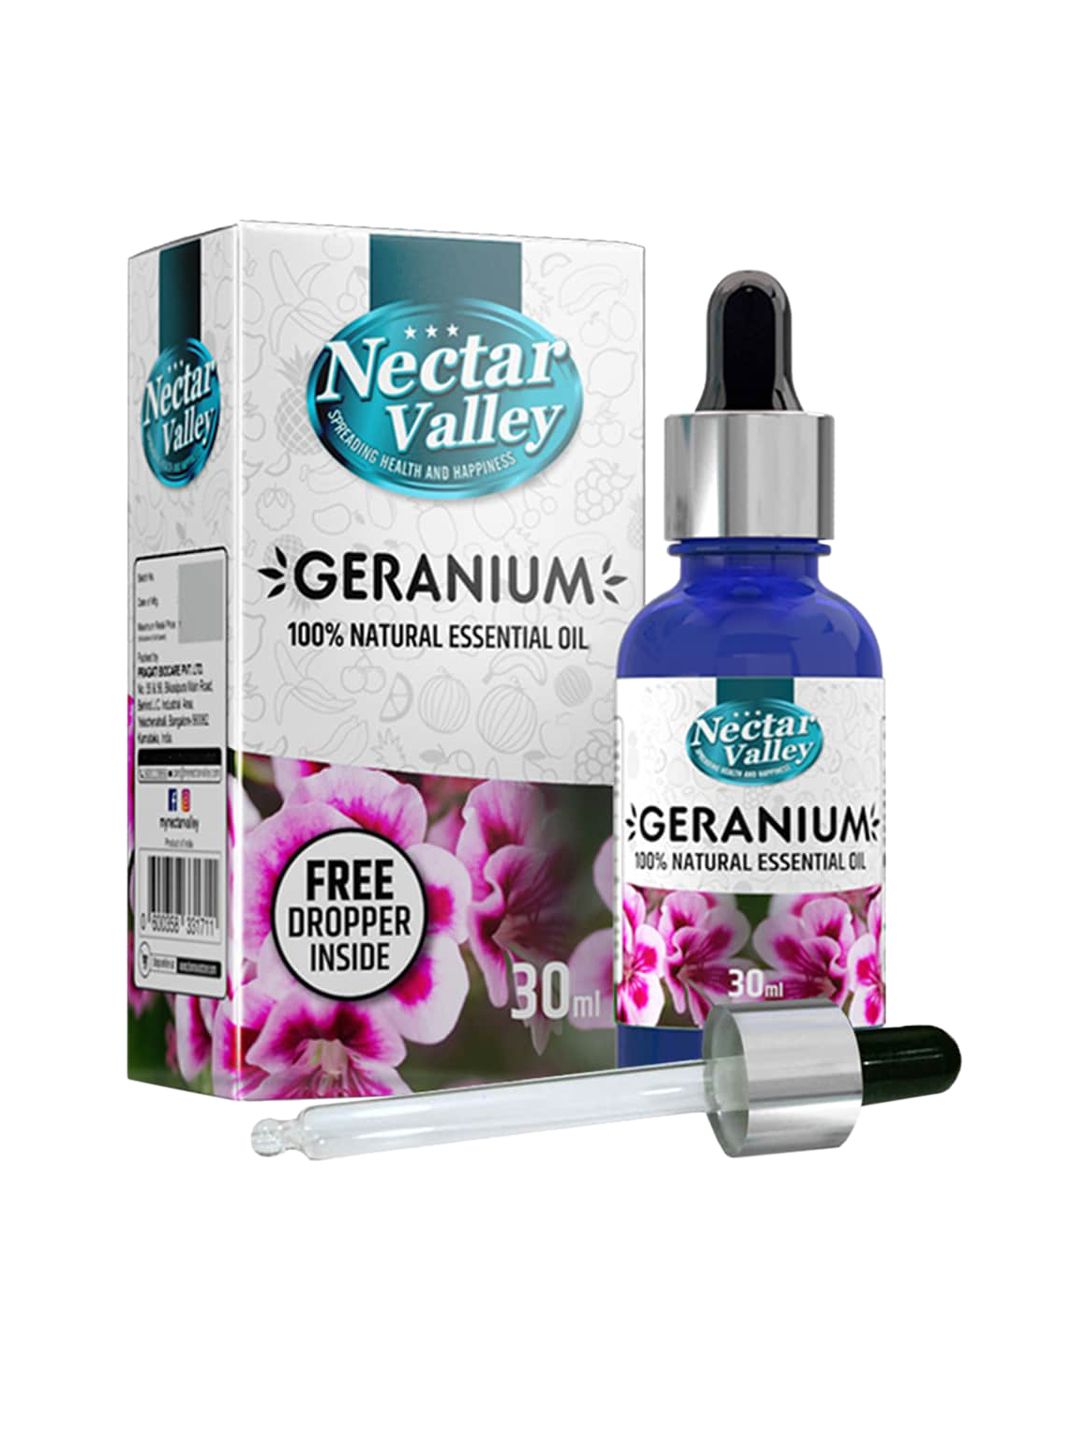 Nectar Valley Nectar Valley Geranium Essential Oil 30 ml Price in India